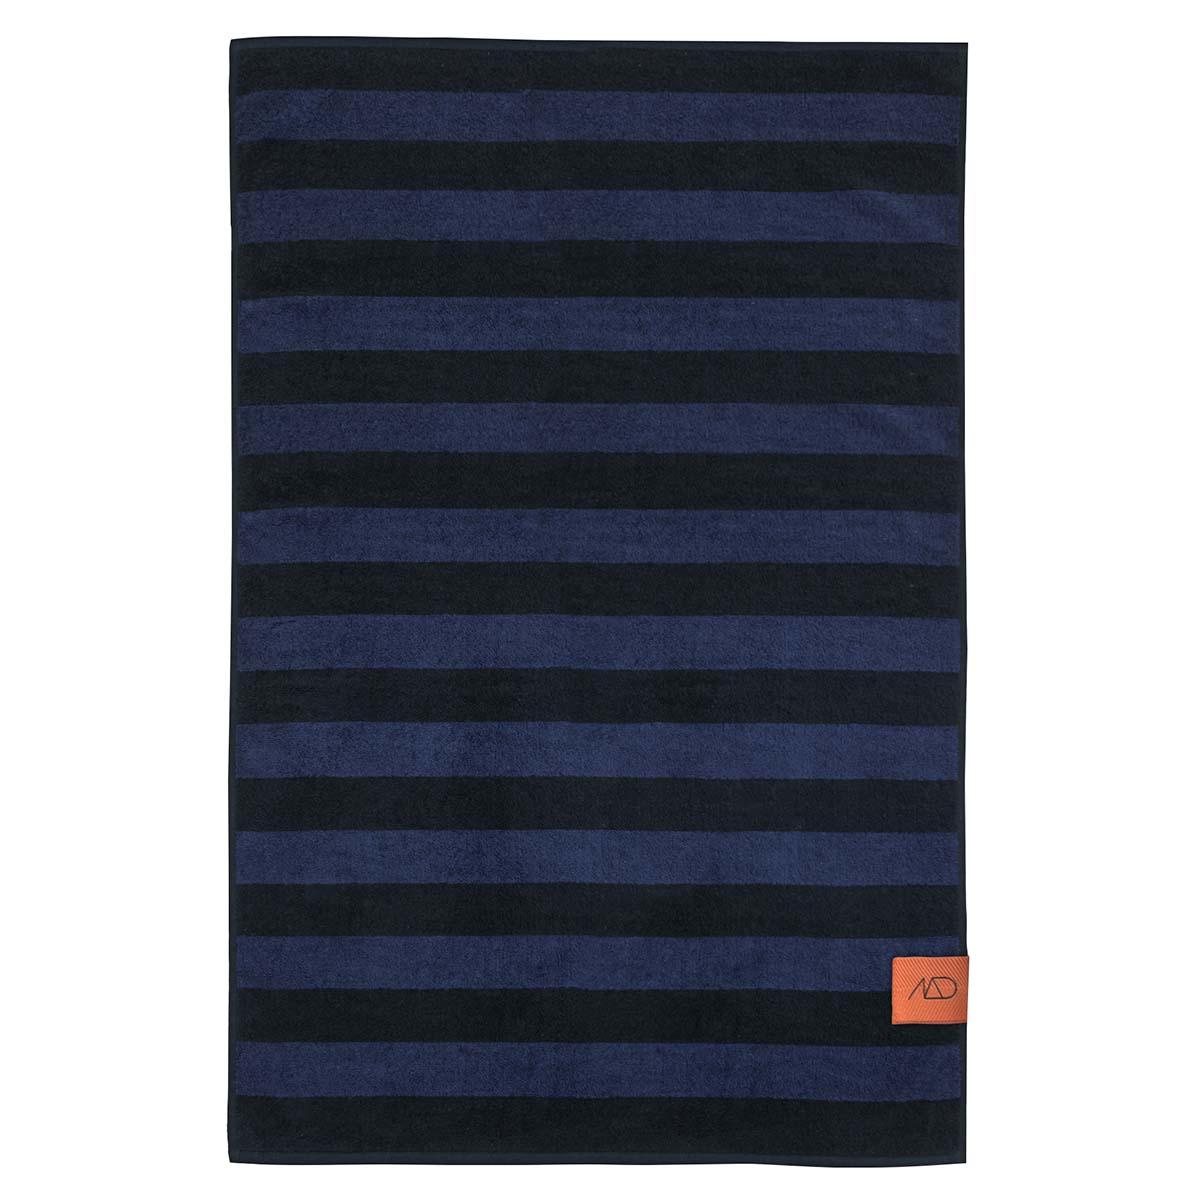 AROS Gæstehåndklæde, 35 x 55 cm, midnight blue